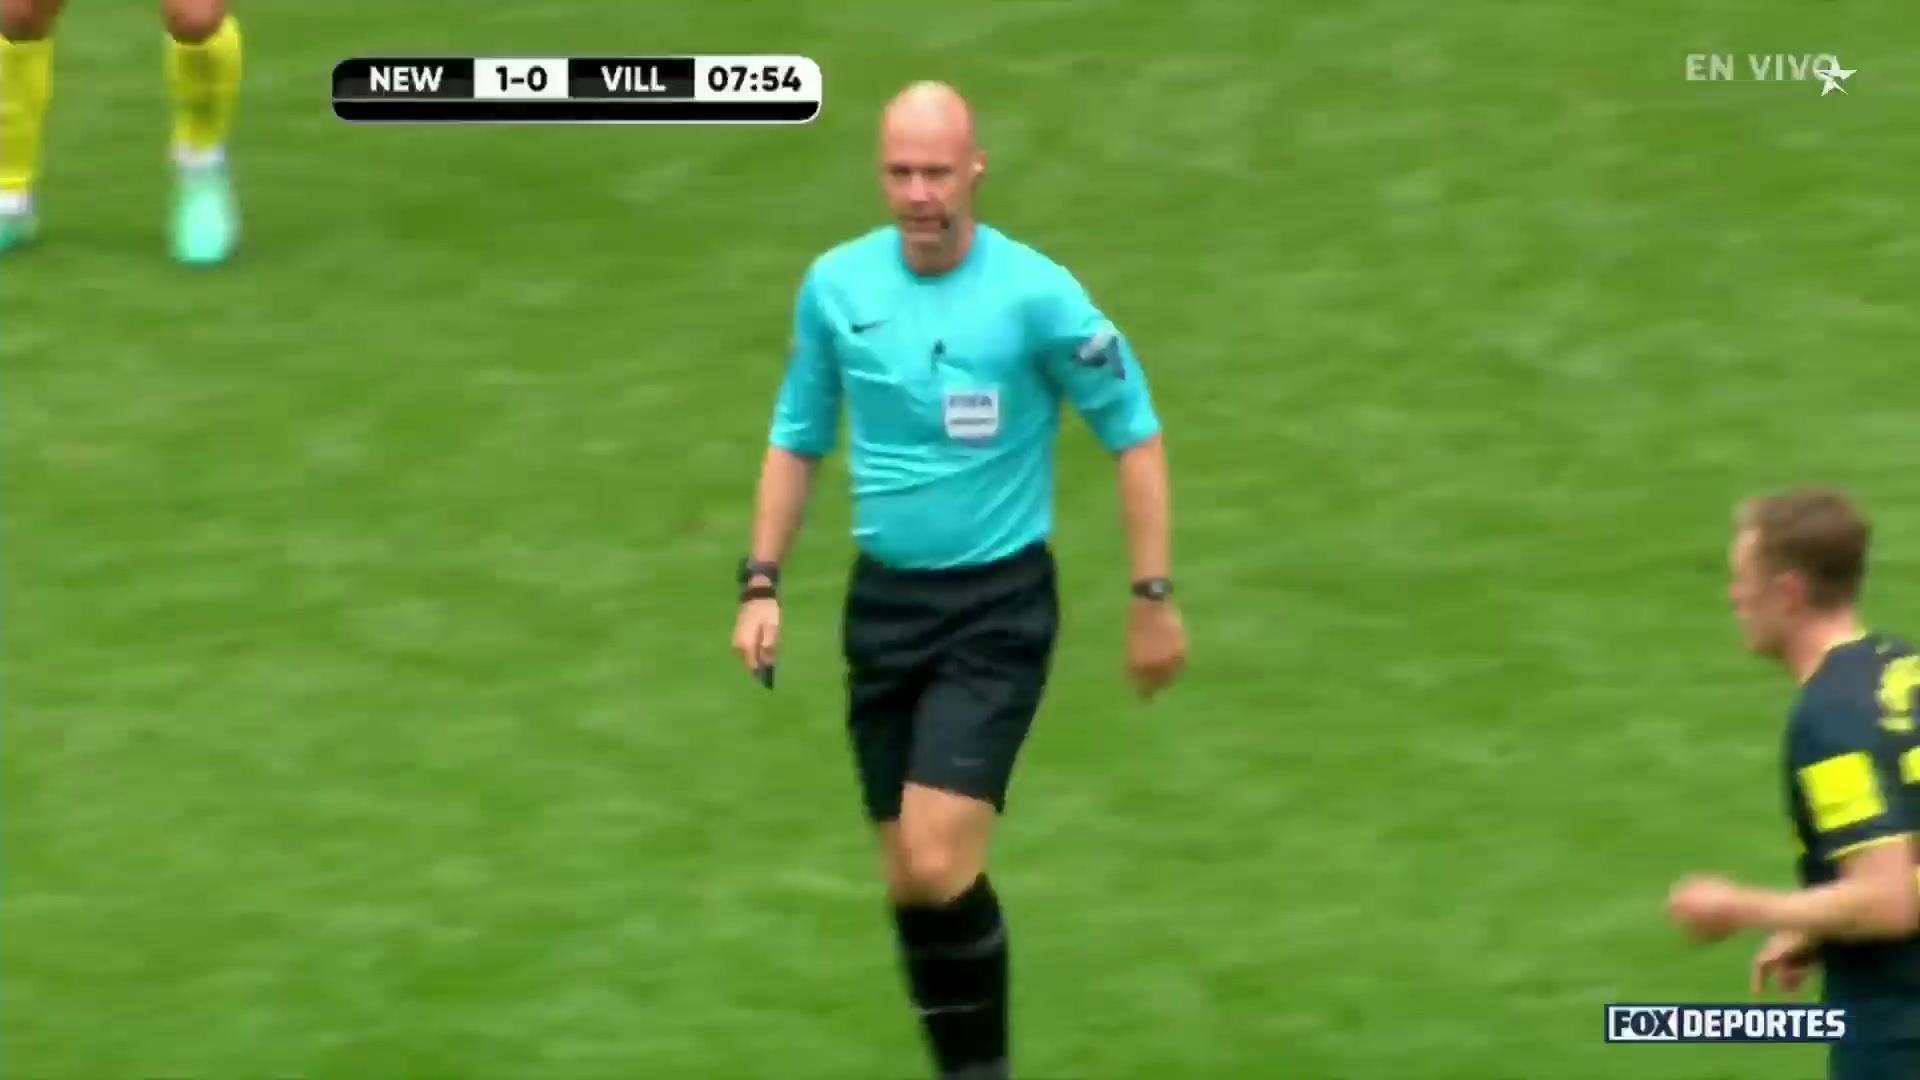 INT CF Newcastle United Vs Villarreal  Goal in 8 min, Score 2:0